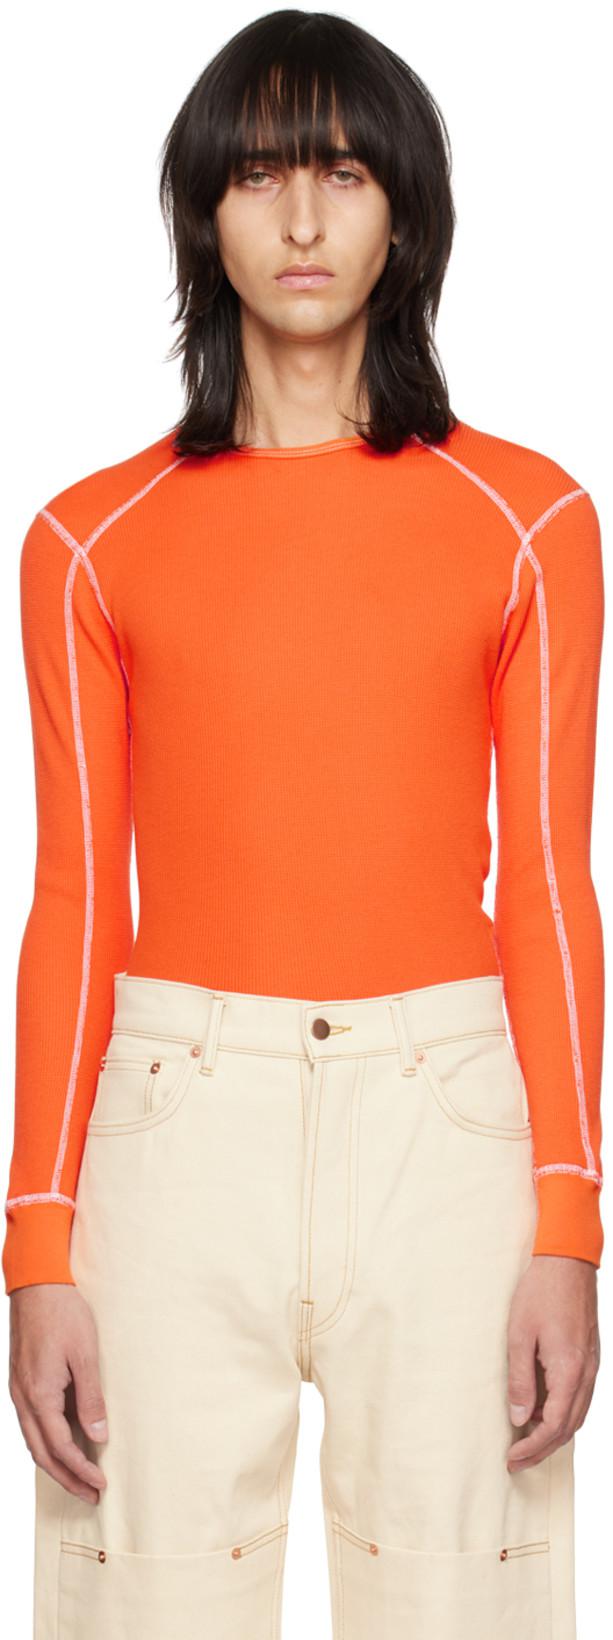 Orange K3 Thermal Long Sleeve T-Shirt by CARSON WACH